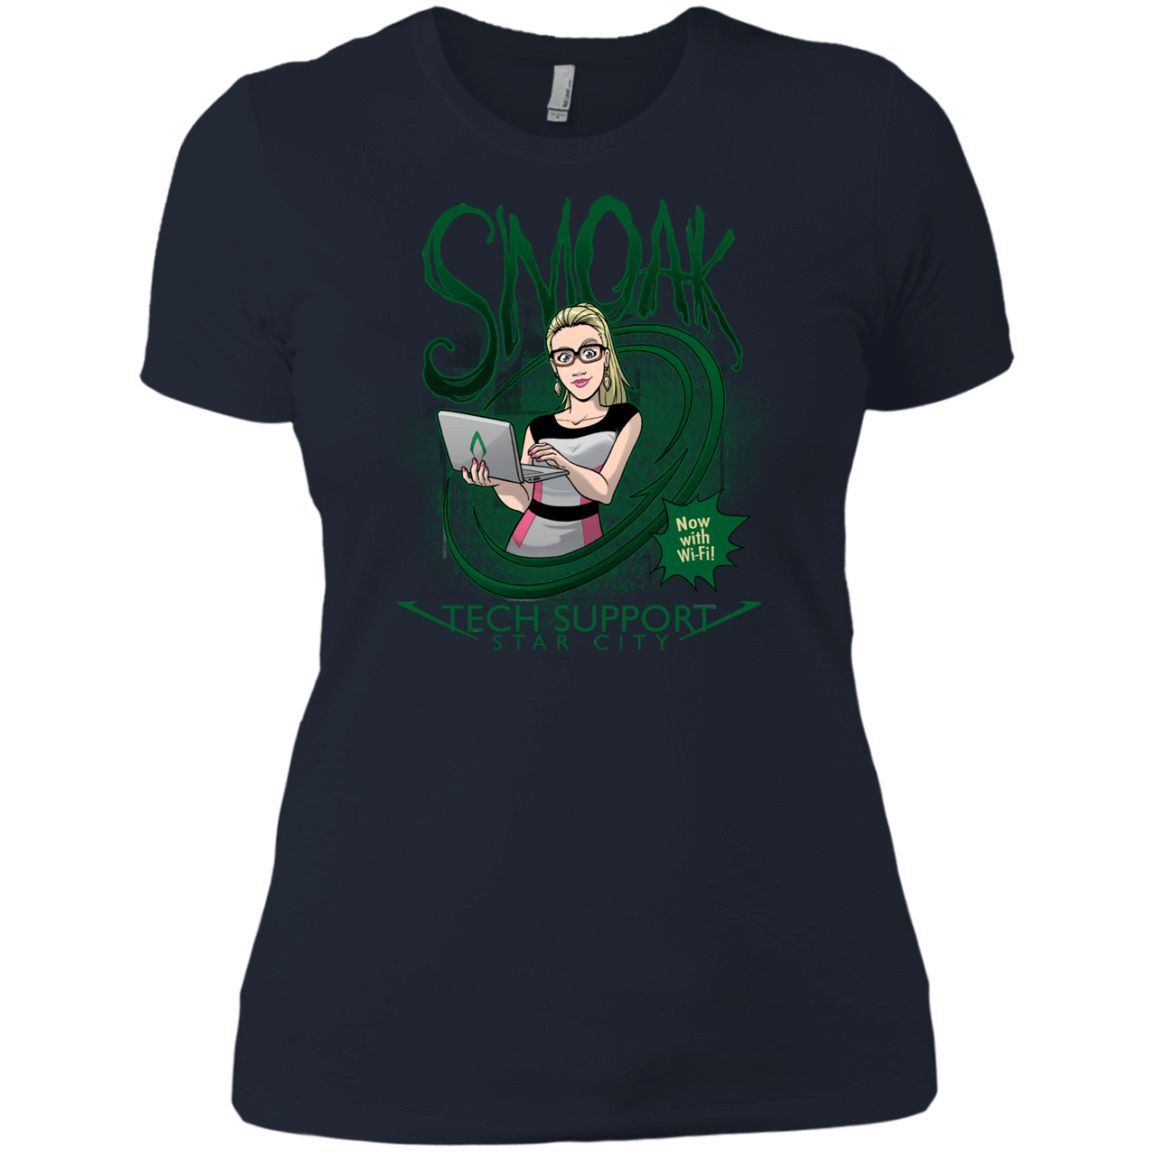 T-Shirts Midnight Navy / X-Small Smoak Women's Premium T-Shirt